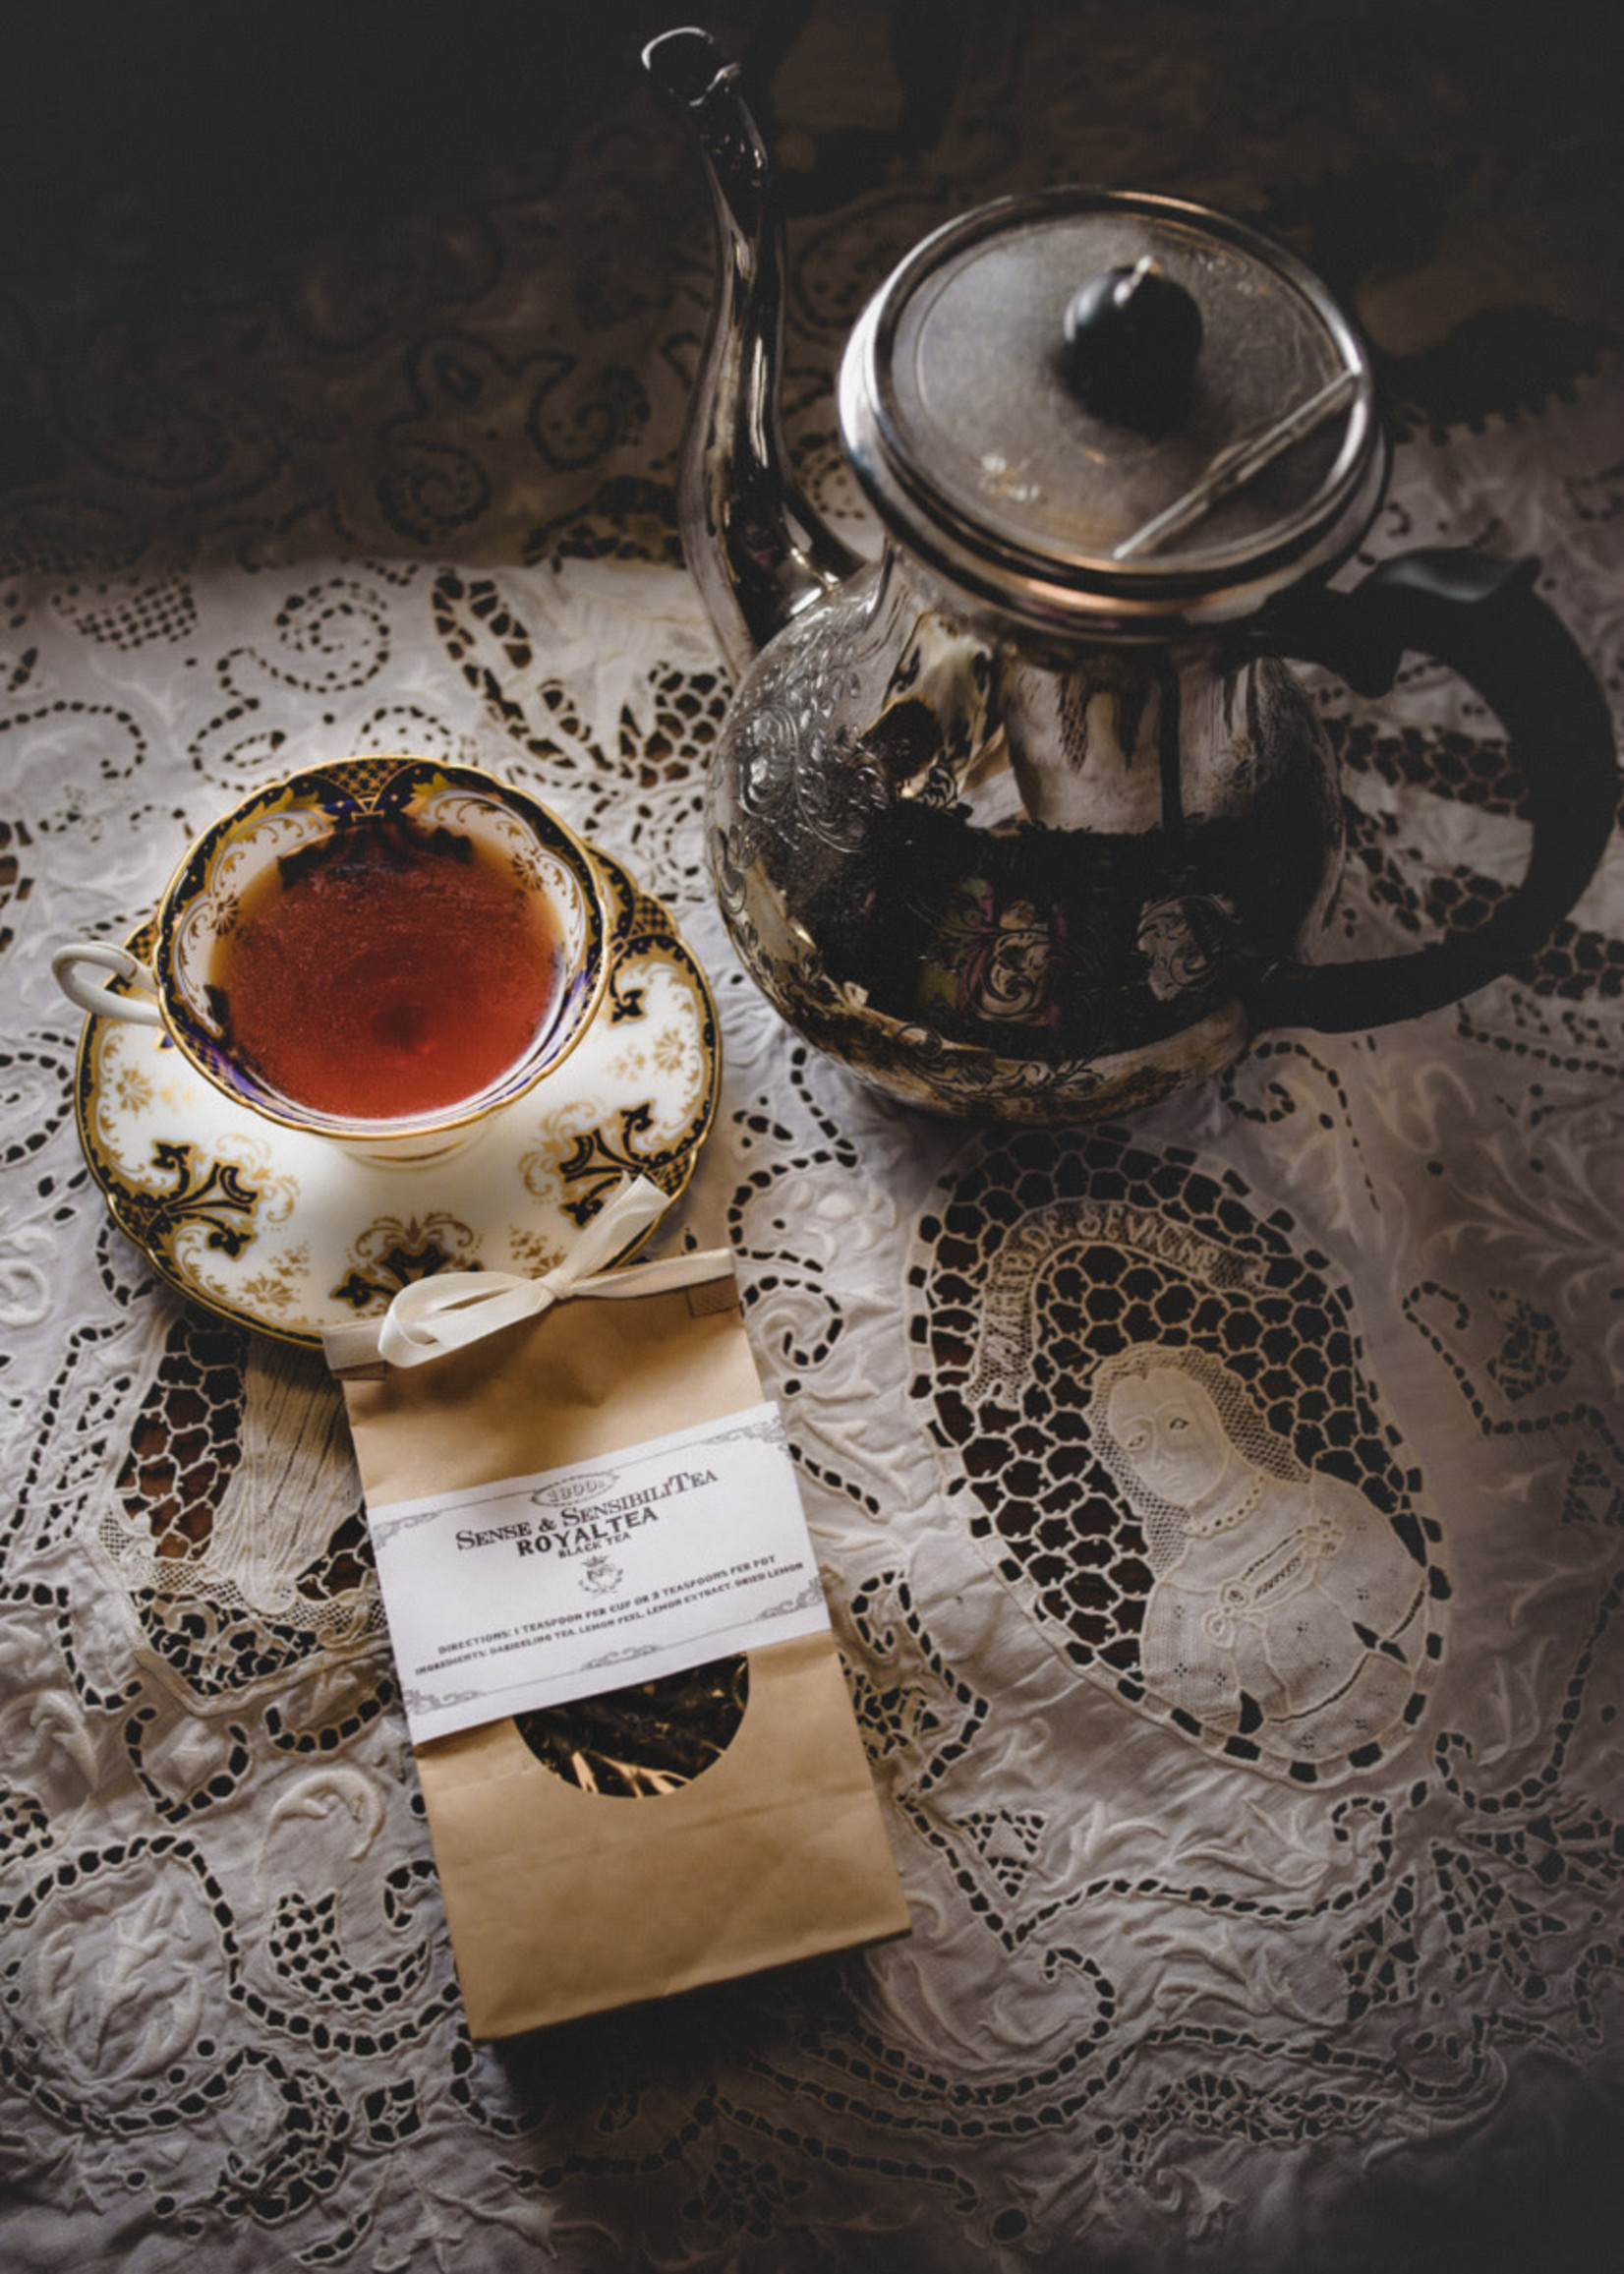 Sense and SensibiliTea 100g RoyalTea (Black Tea) – 1800s